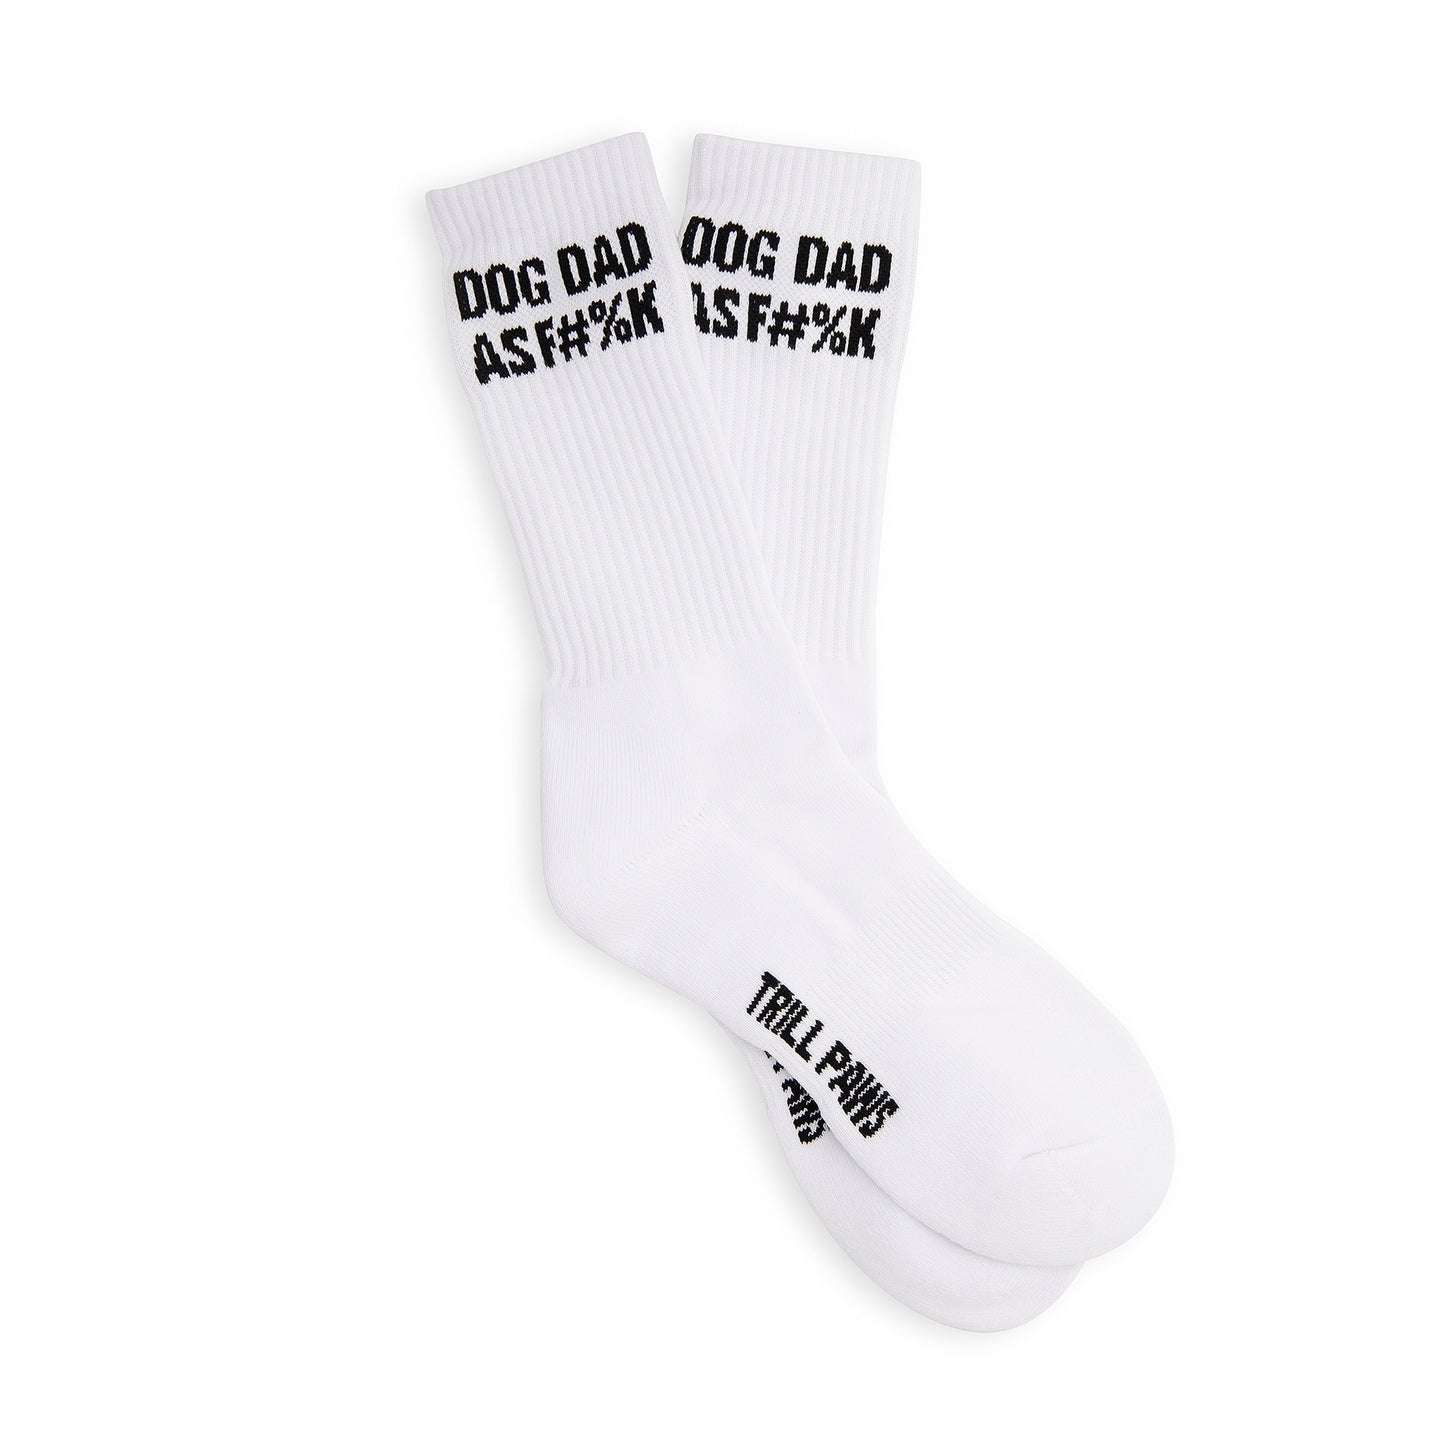 Dog Dad Socks - black and white socks says dog dad as fuck